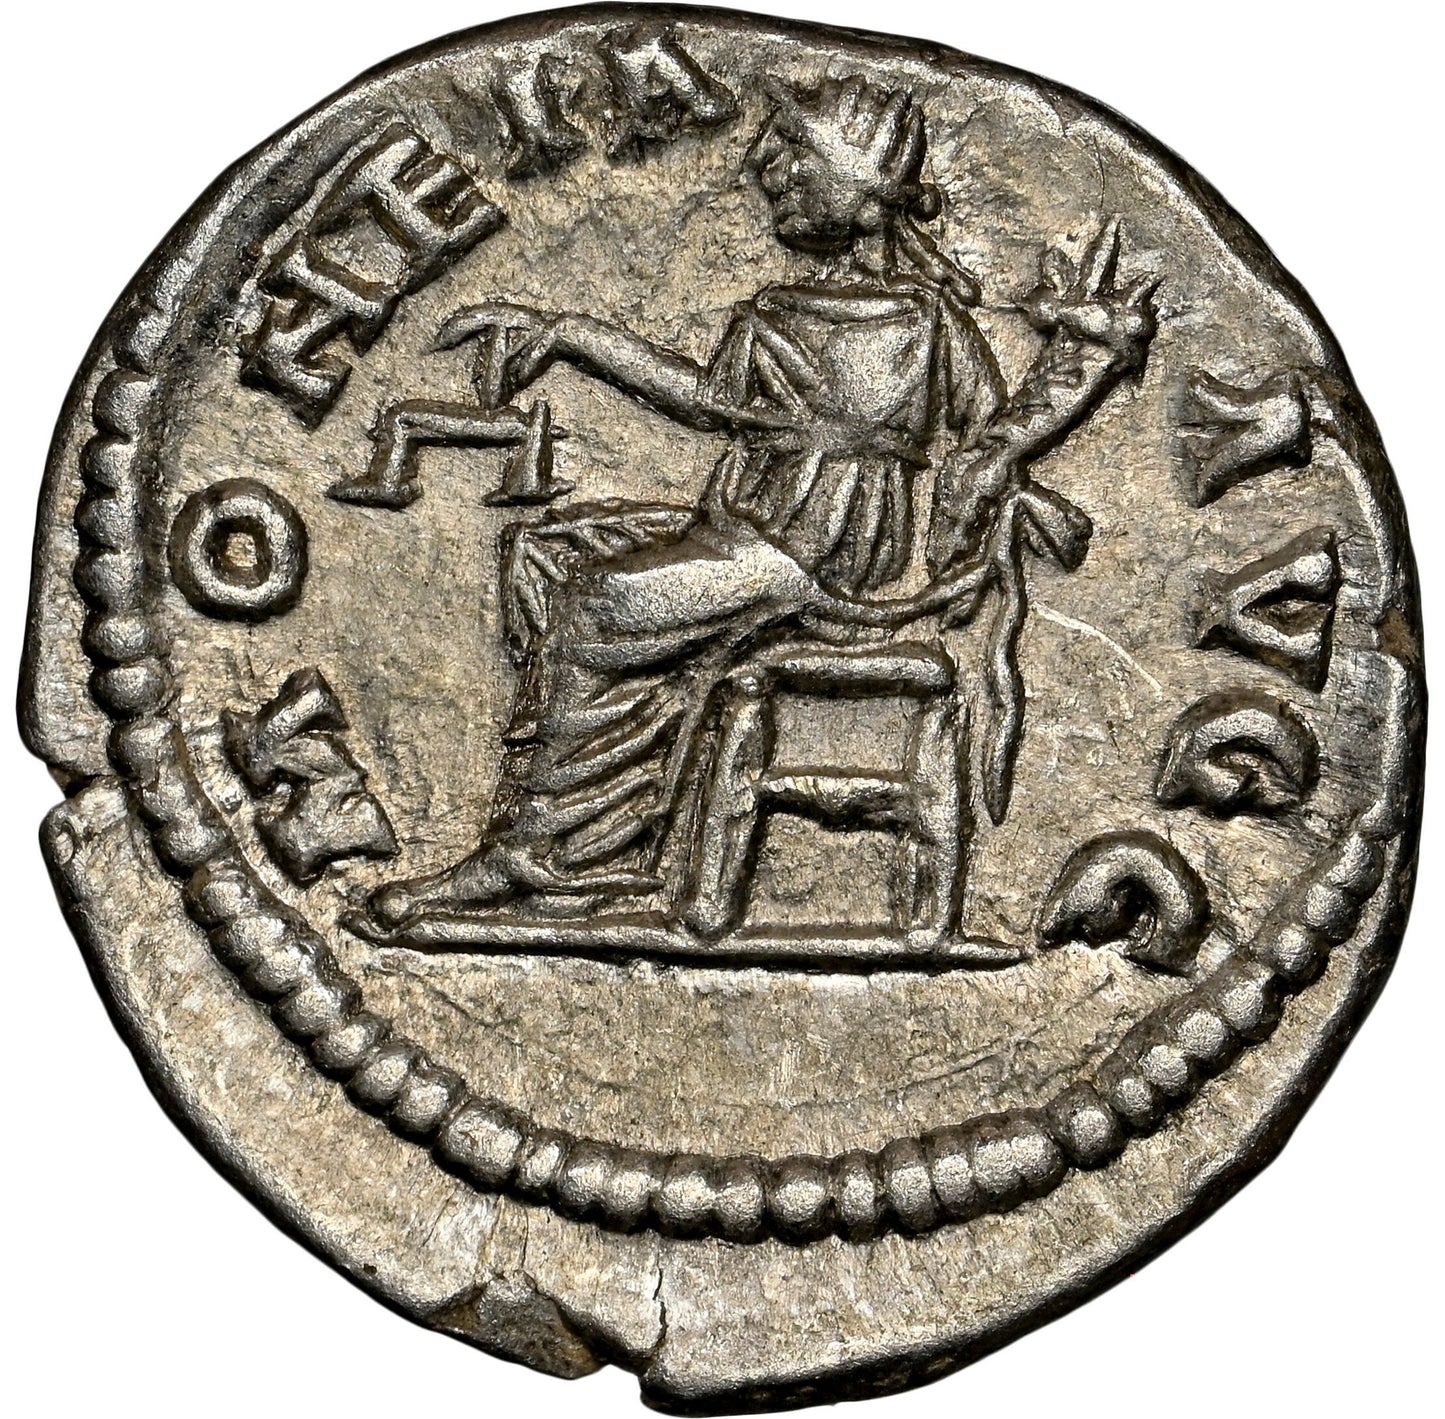 Roman Empire - Septimius Severus - Silver Denarius - NGC AU - RIC:510a